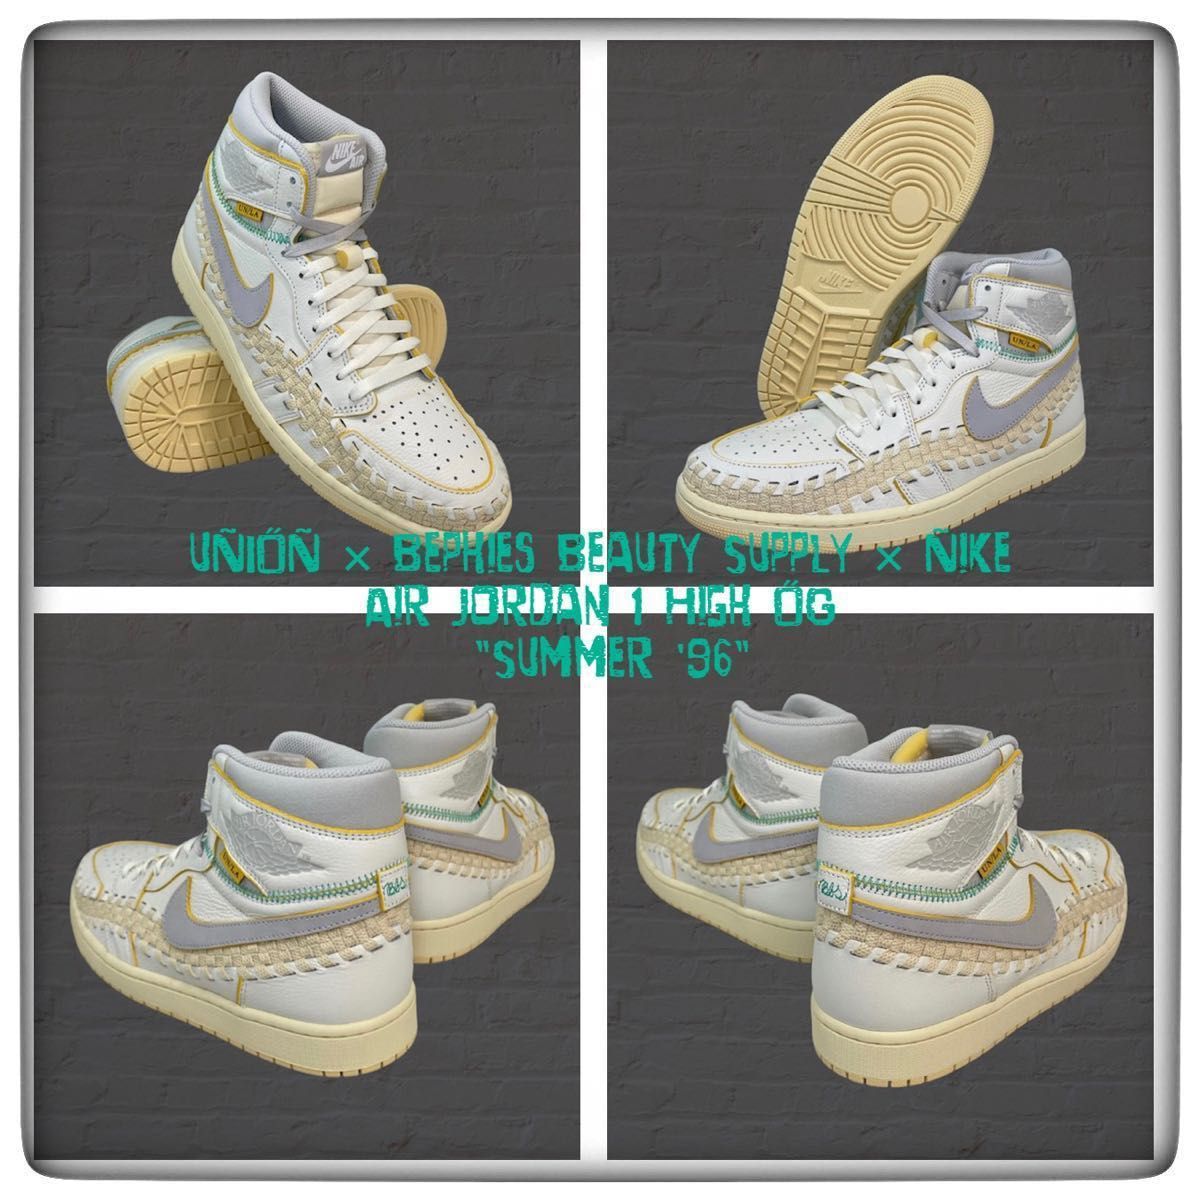 UNION × Bephies Beauty Supply × Nike Air Jordan 1 High OG